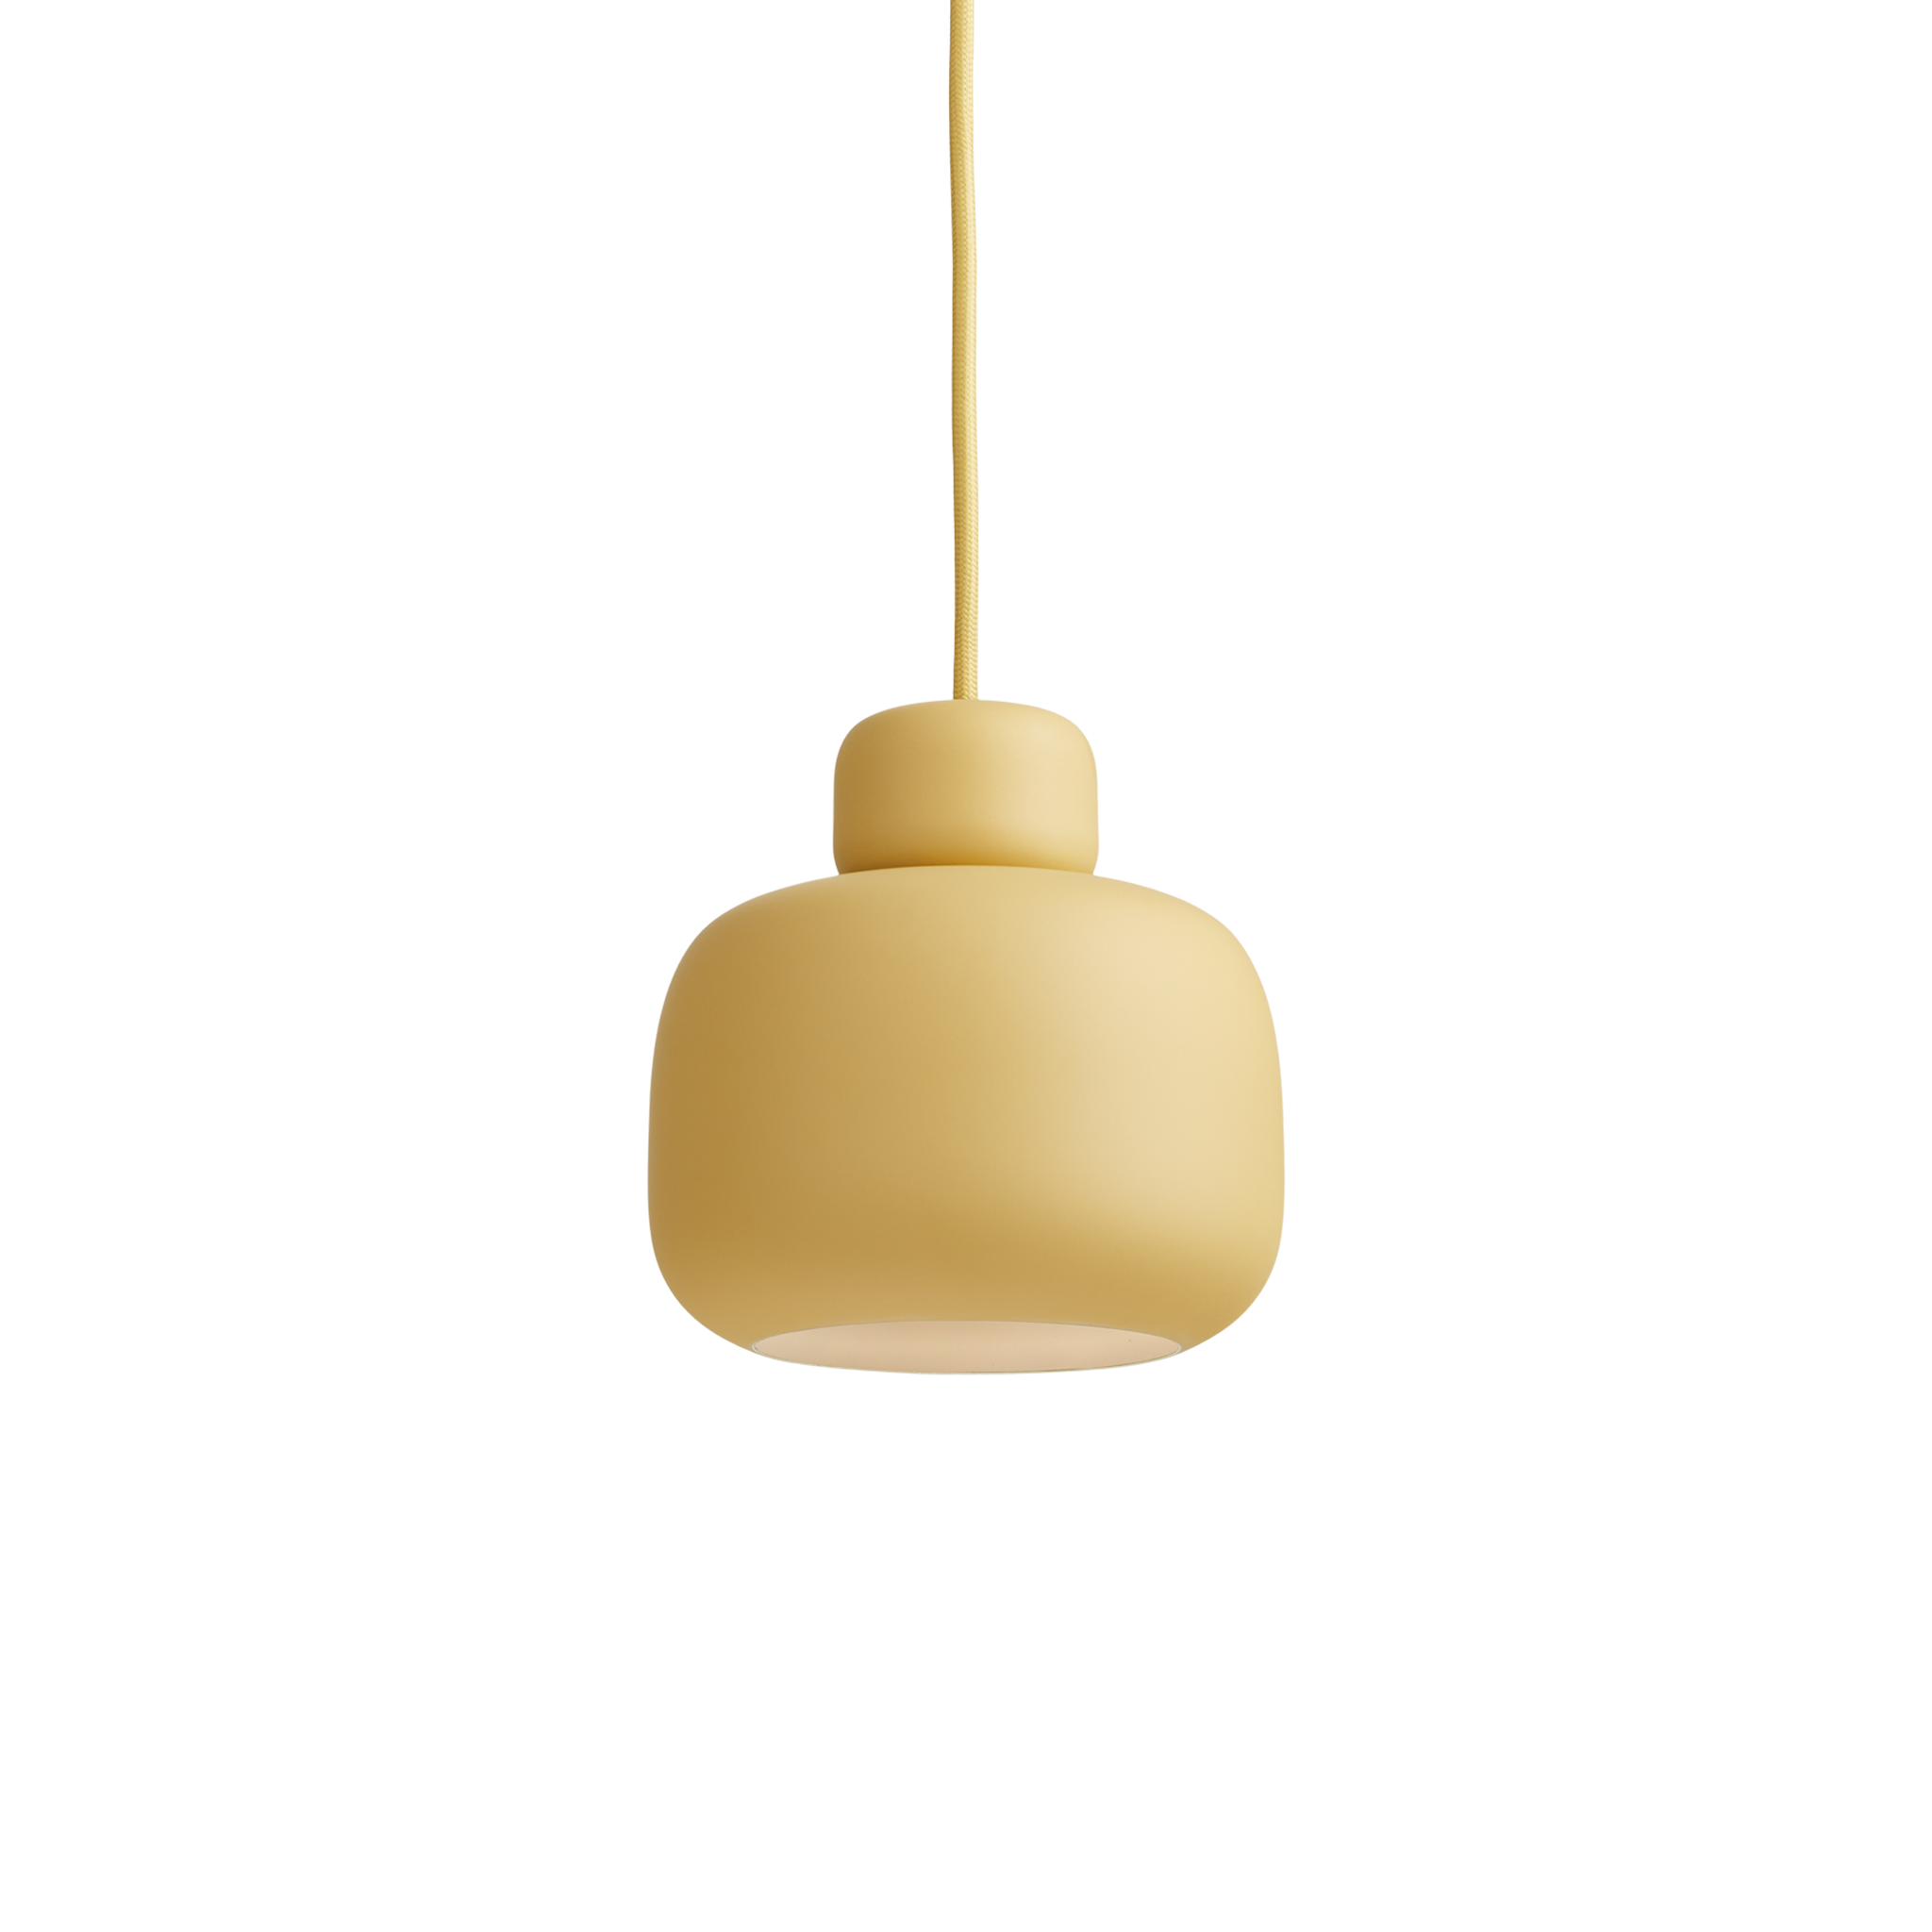 Woud - Stone Pinging (pequeno) - Mustard